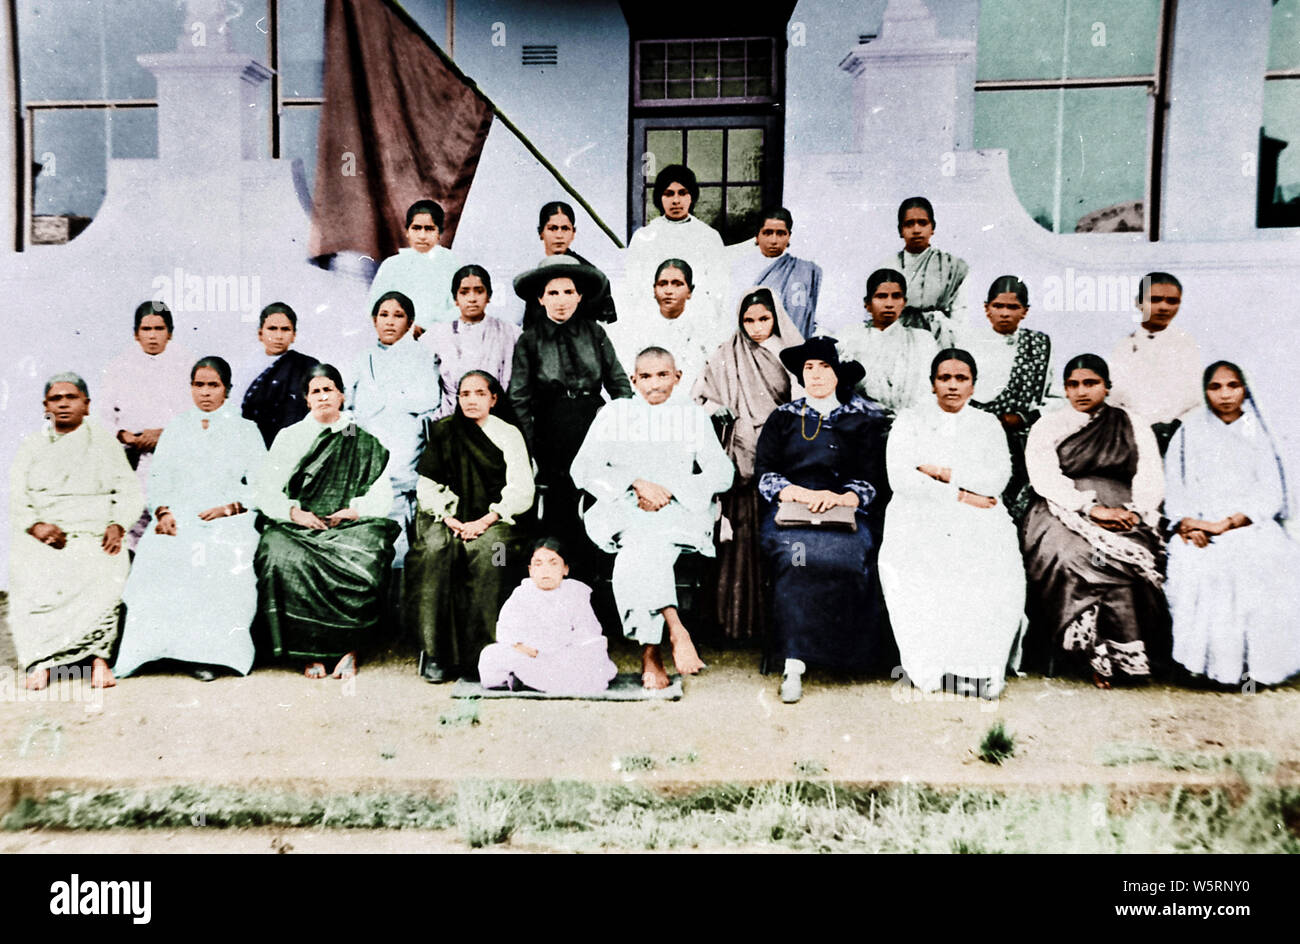 Kasturba Gandhi et Mahatma Gandhi avec groupe de femmes 1913 Banque D'Images